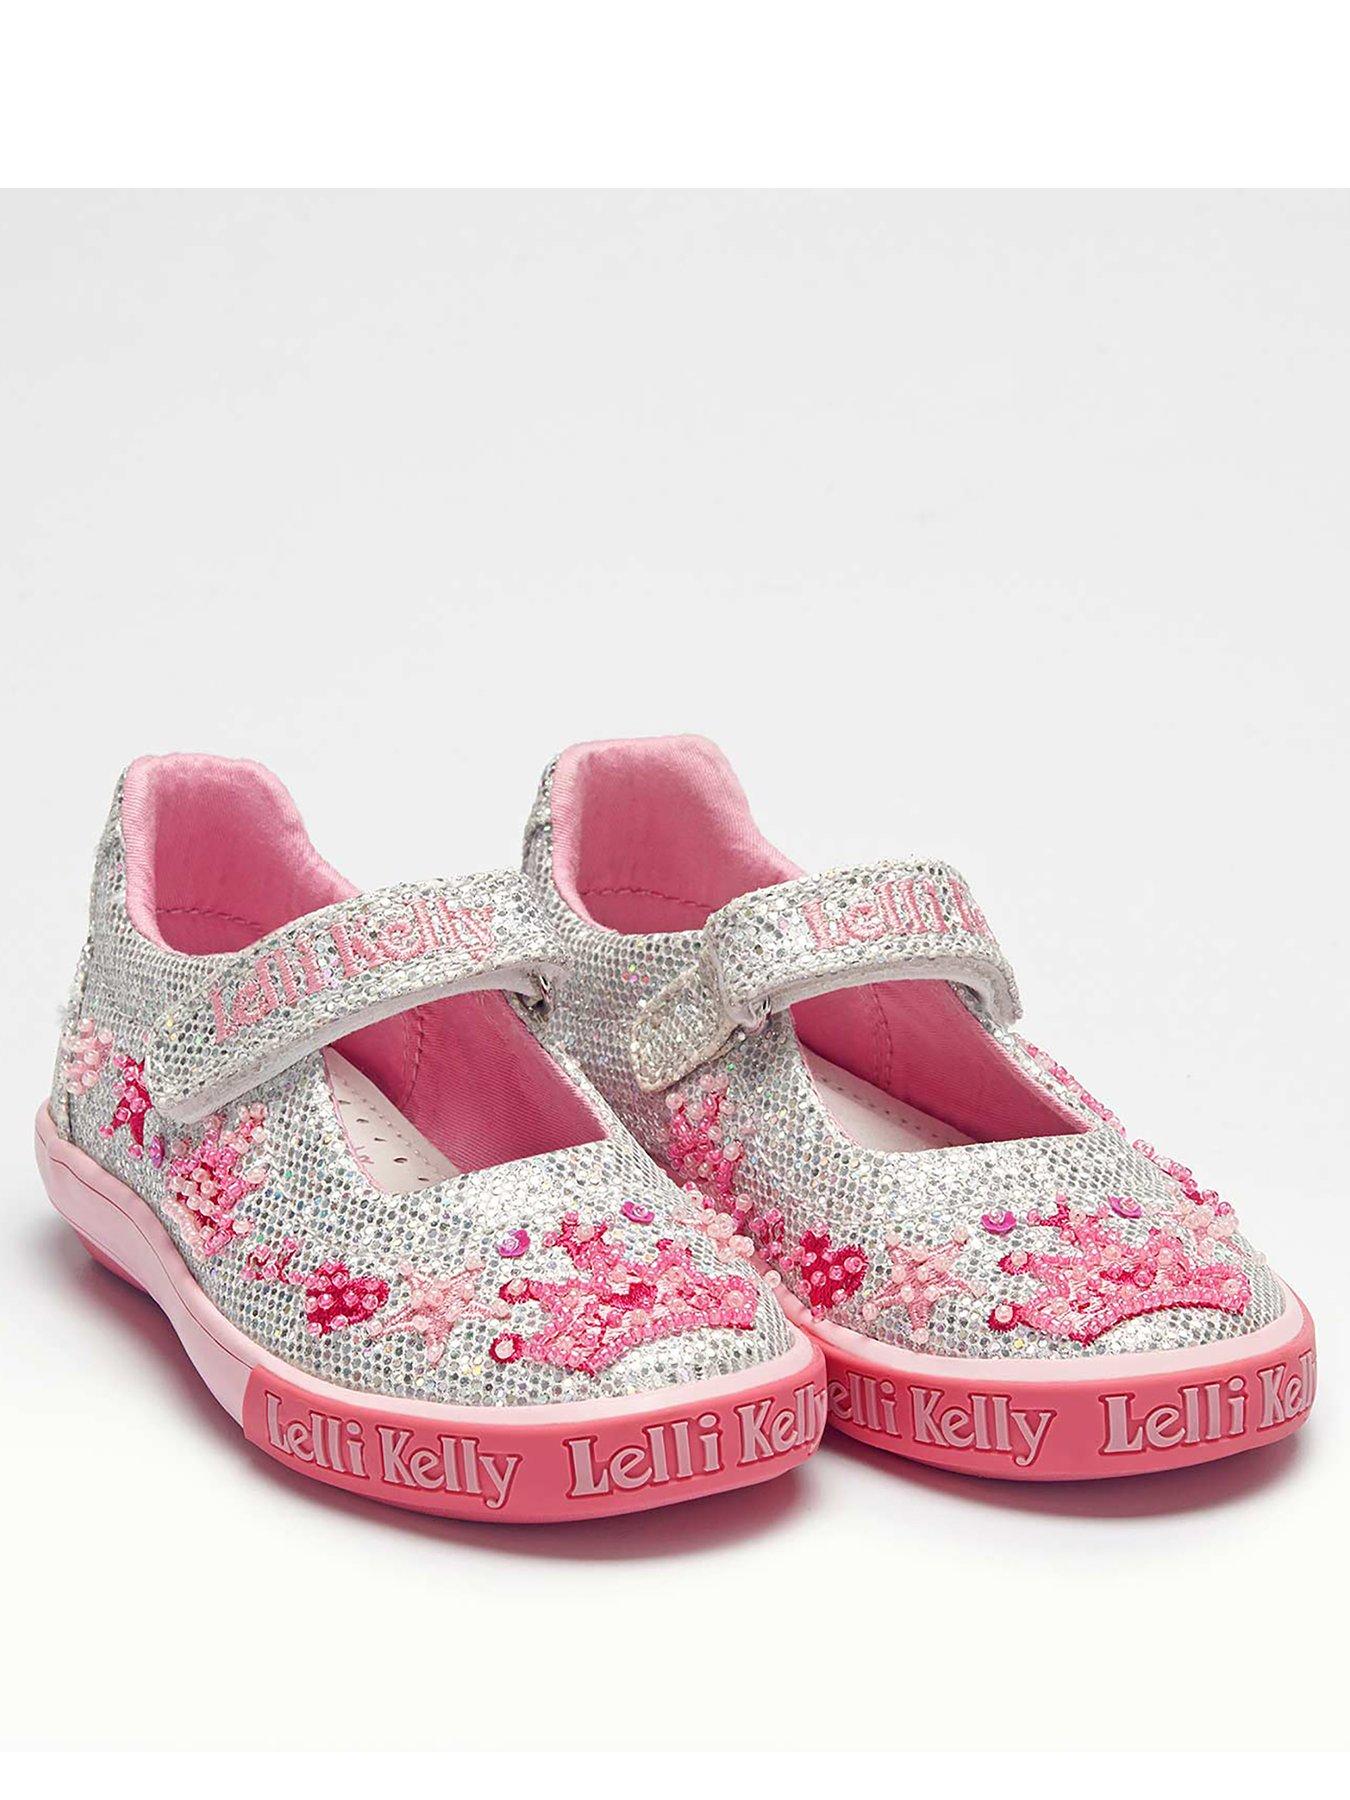 Lelli Kelly Girls Tiara Dolly Shoe 